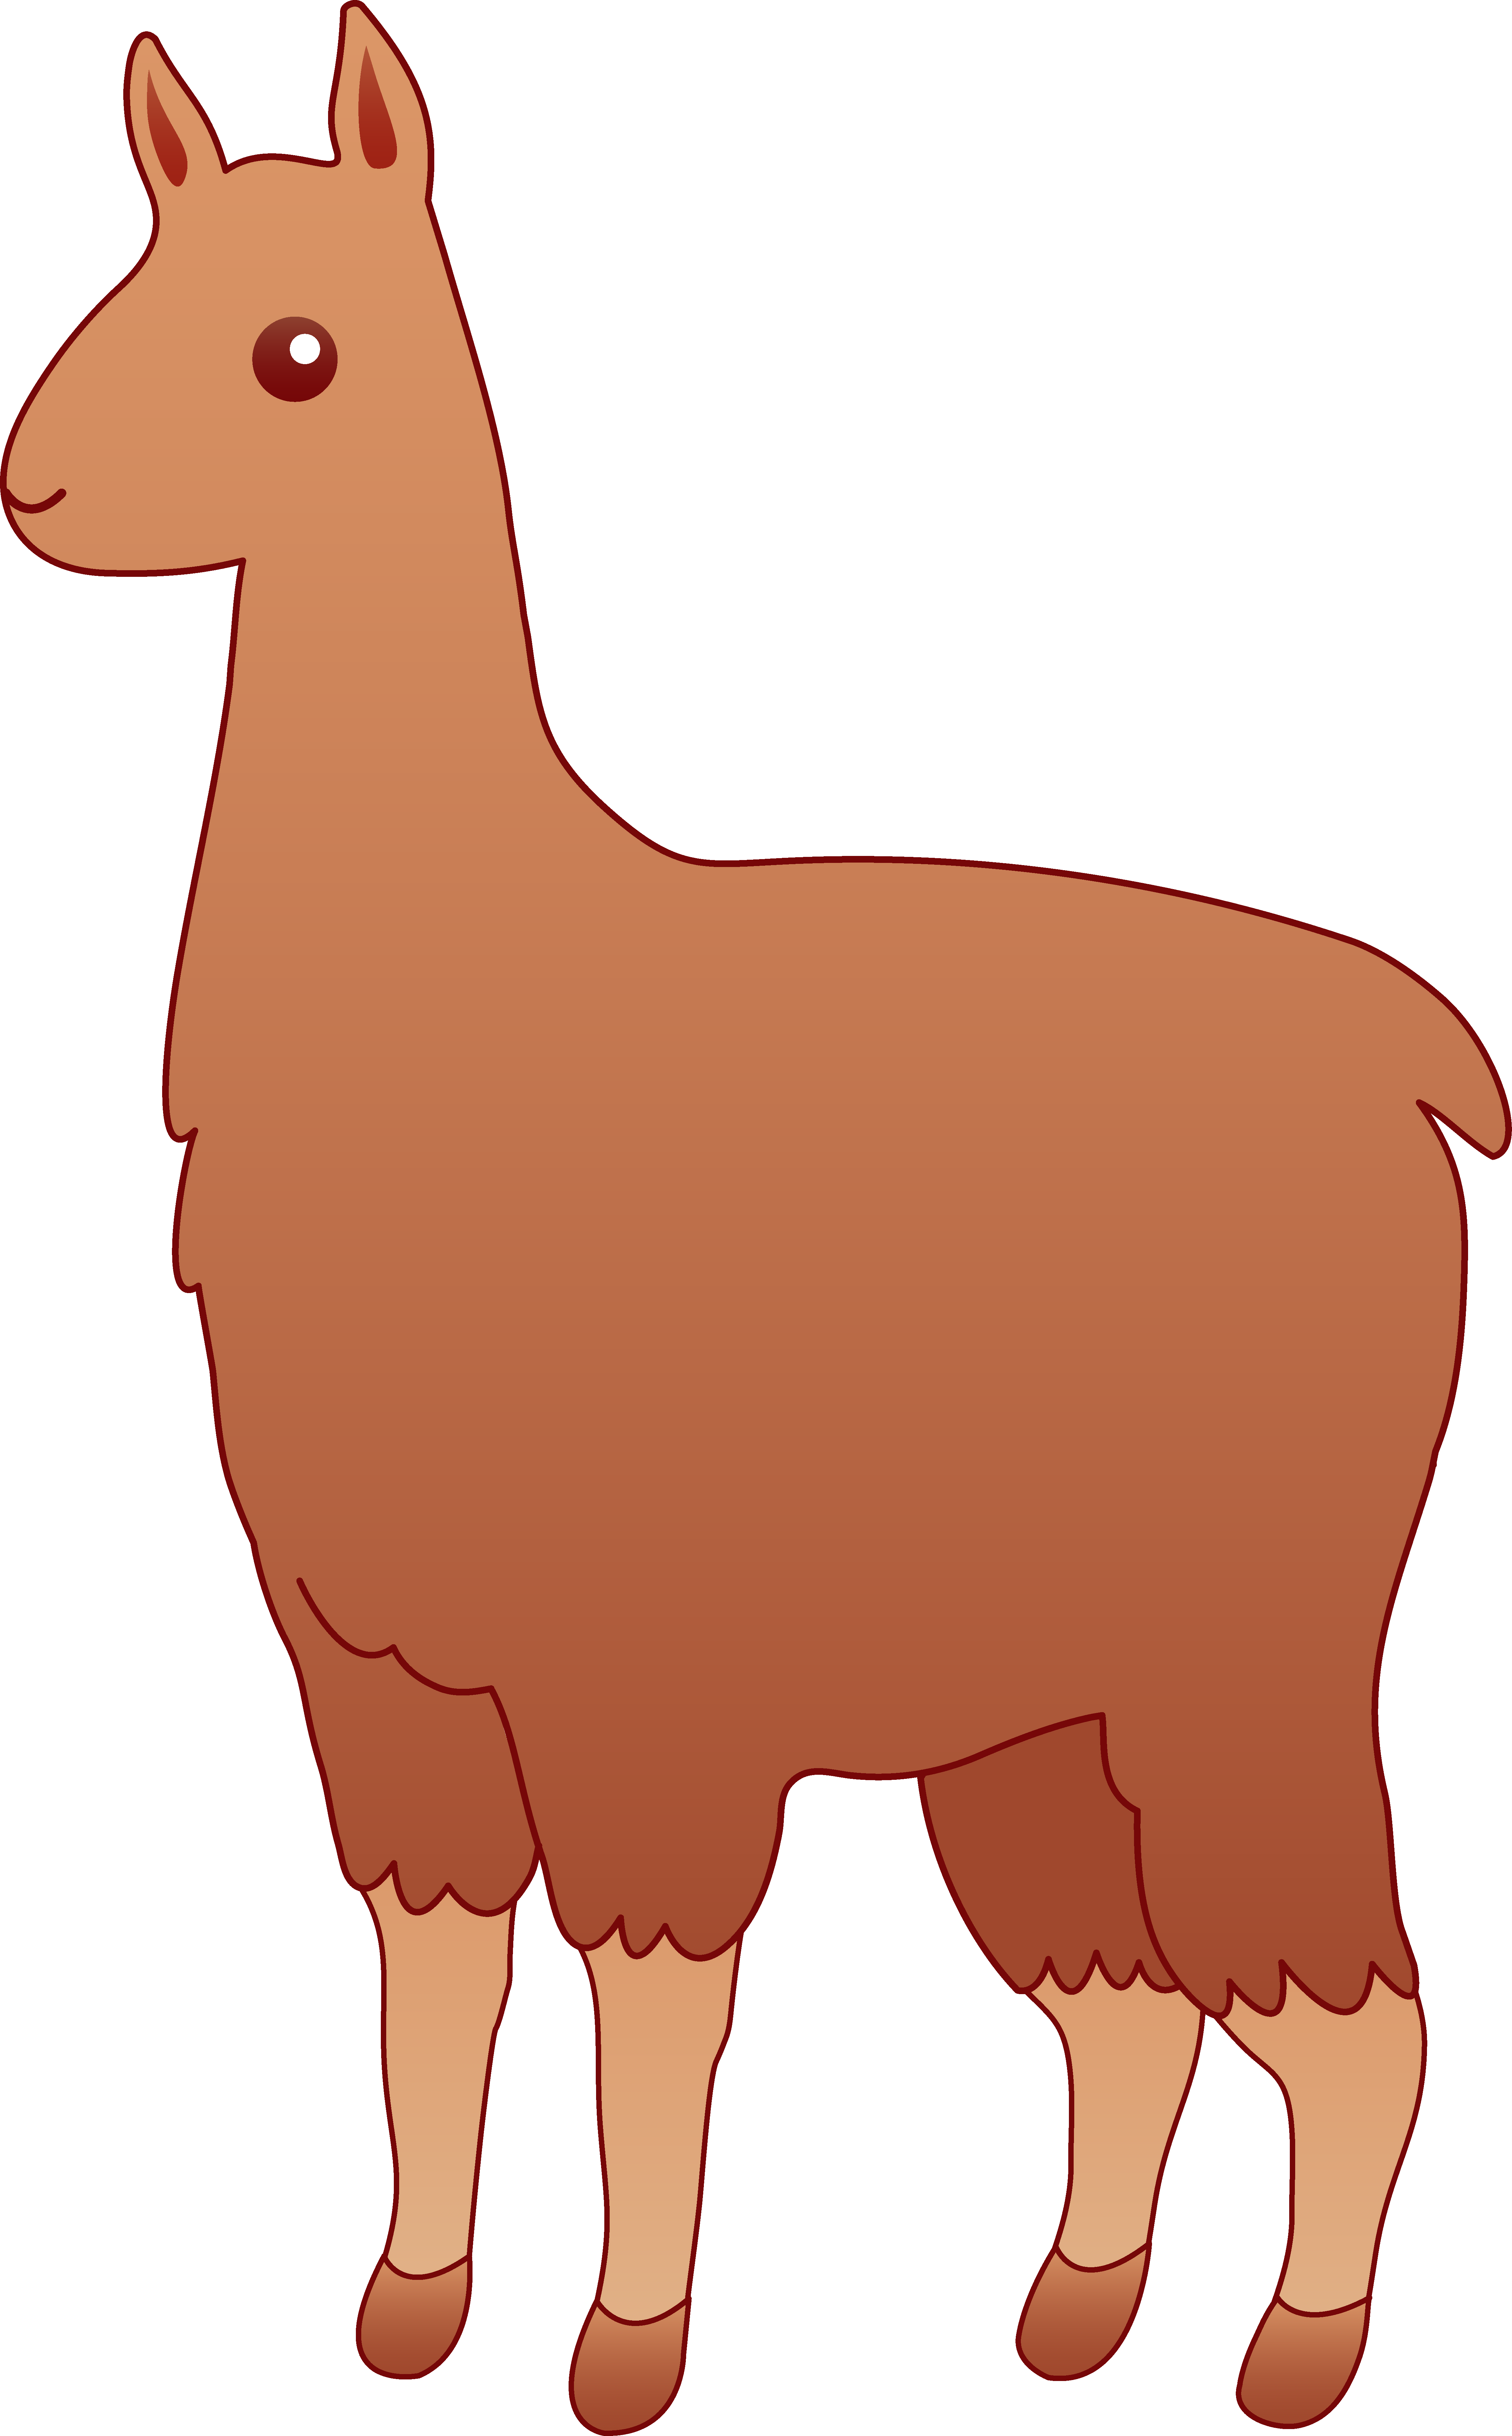 A Cartoon Of A Llama